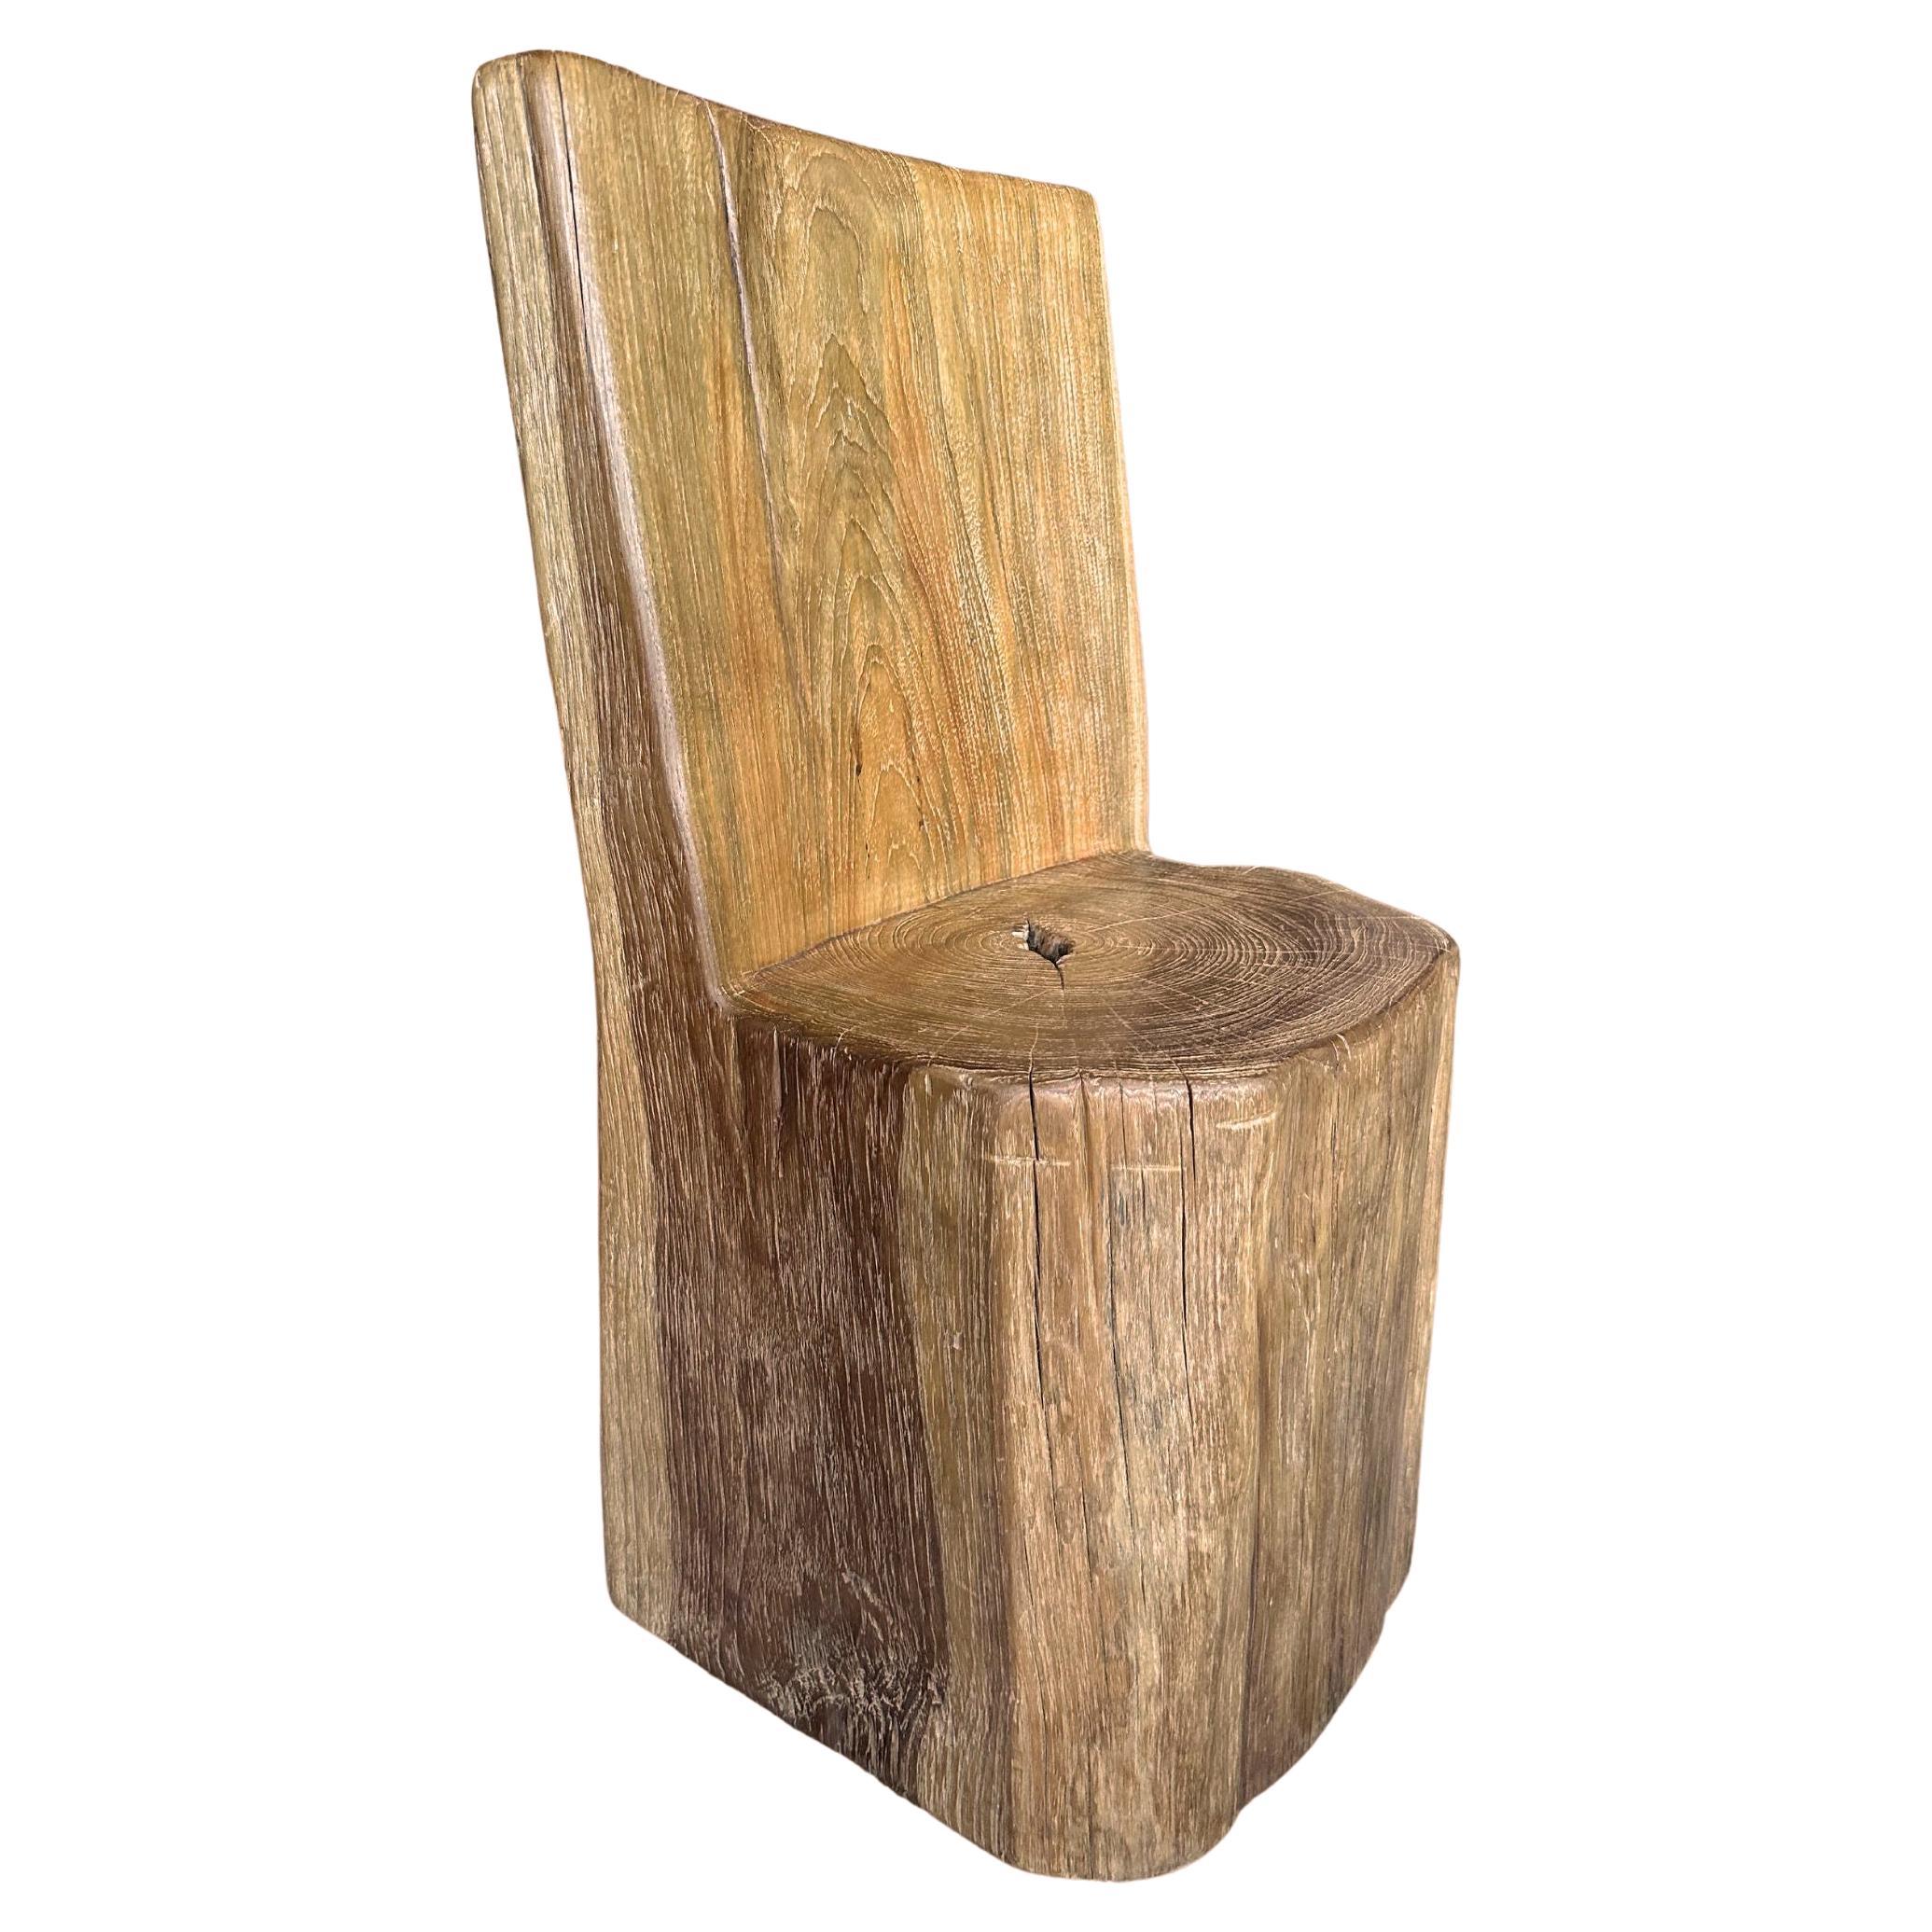 Sculptural Soild Teak Wood Chair For Sale